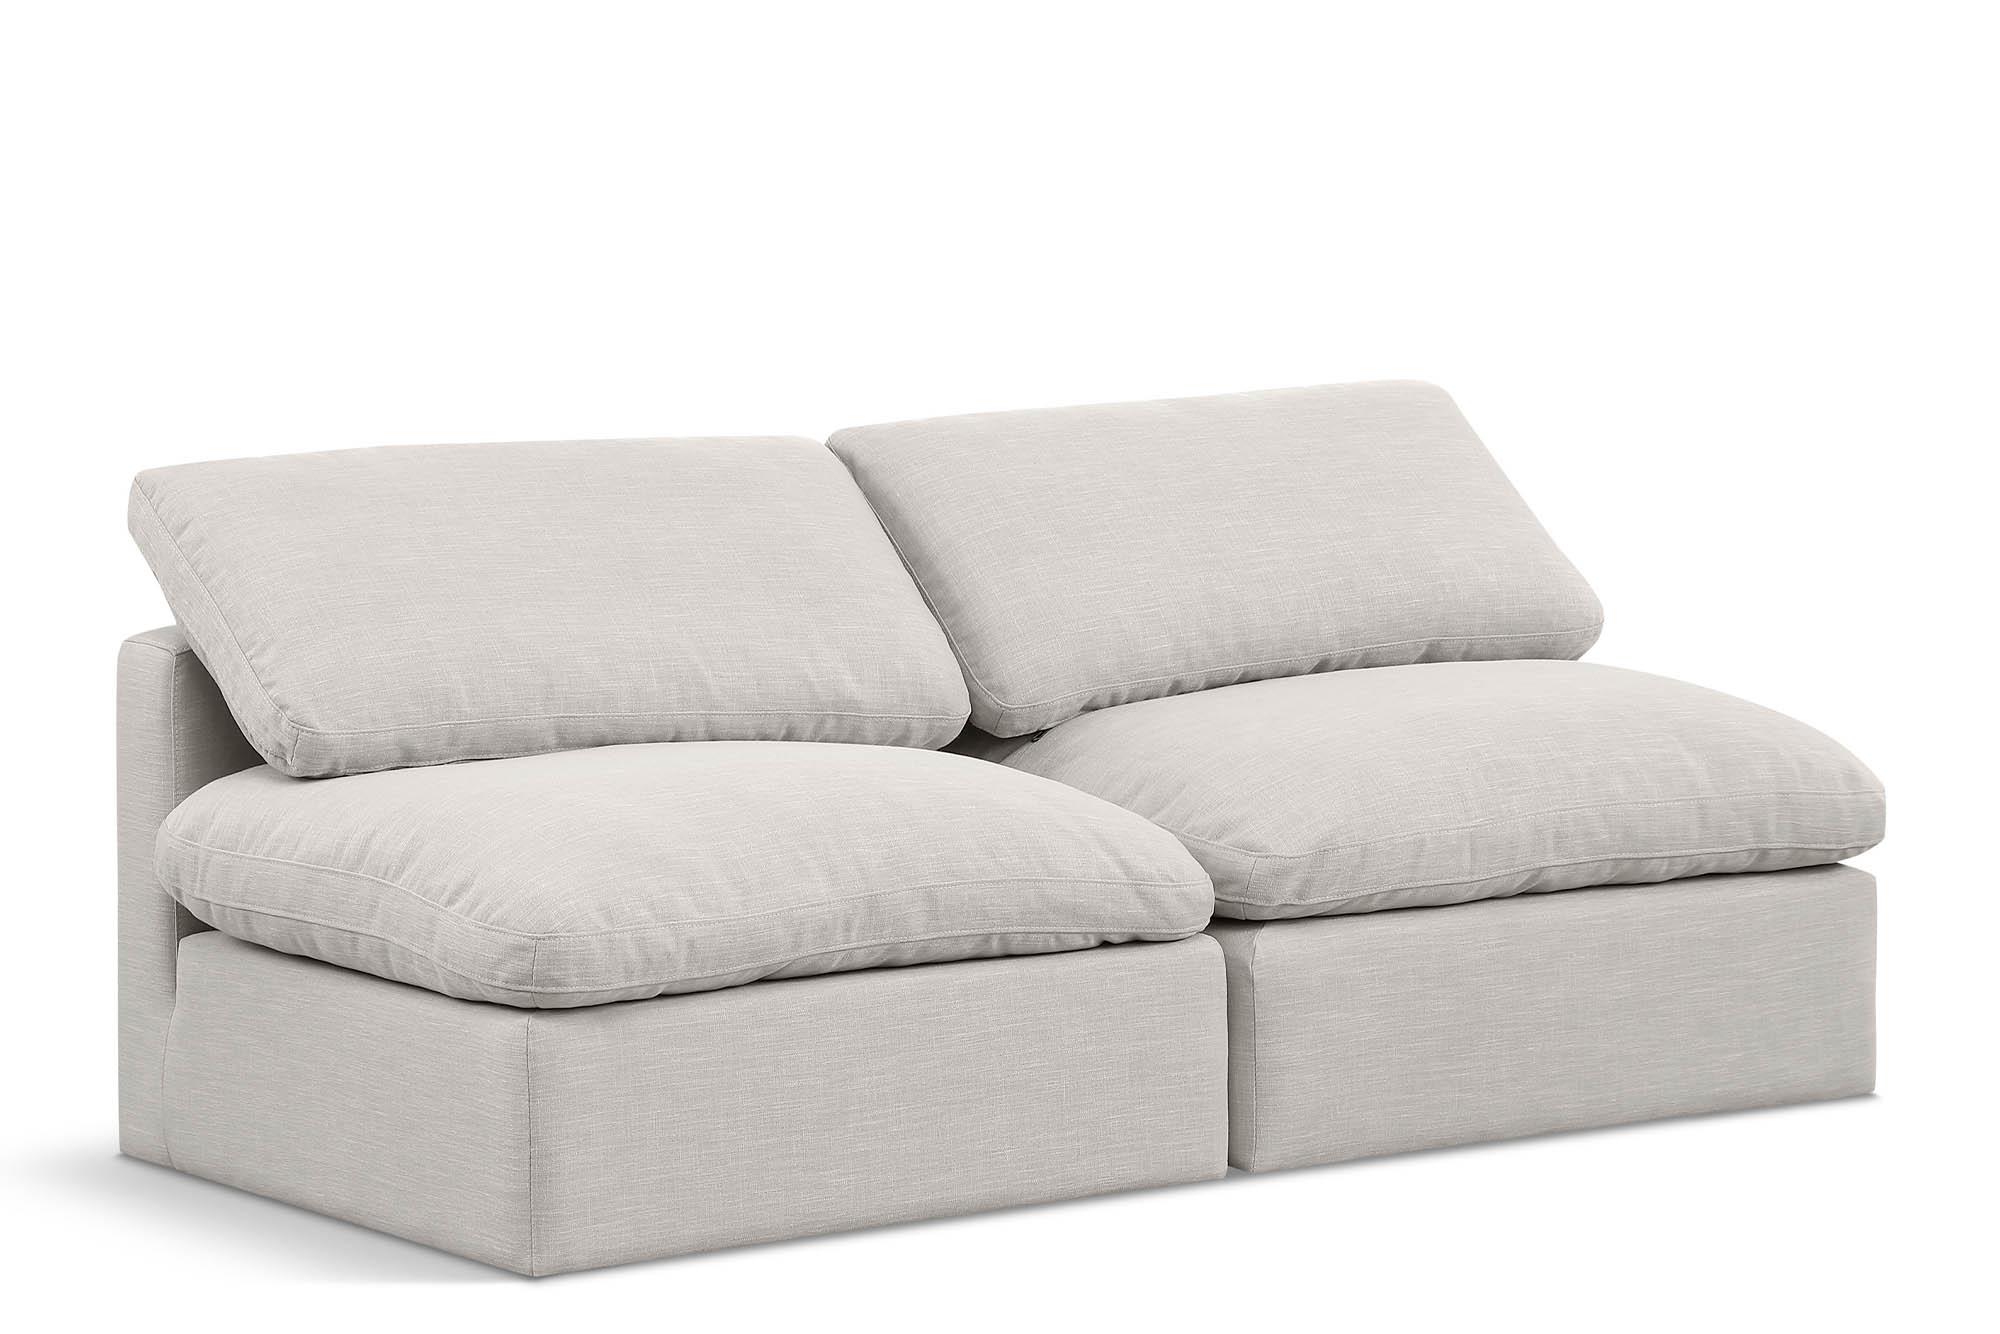 Contemporary, Modern Modular Sofa INDULGE 141Cream-S2 141Cream-S2 in Cream Linen